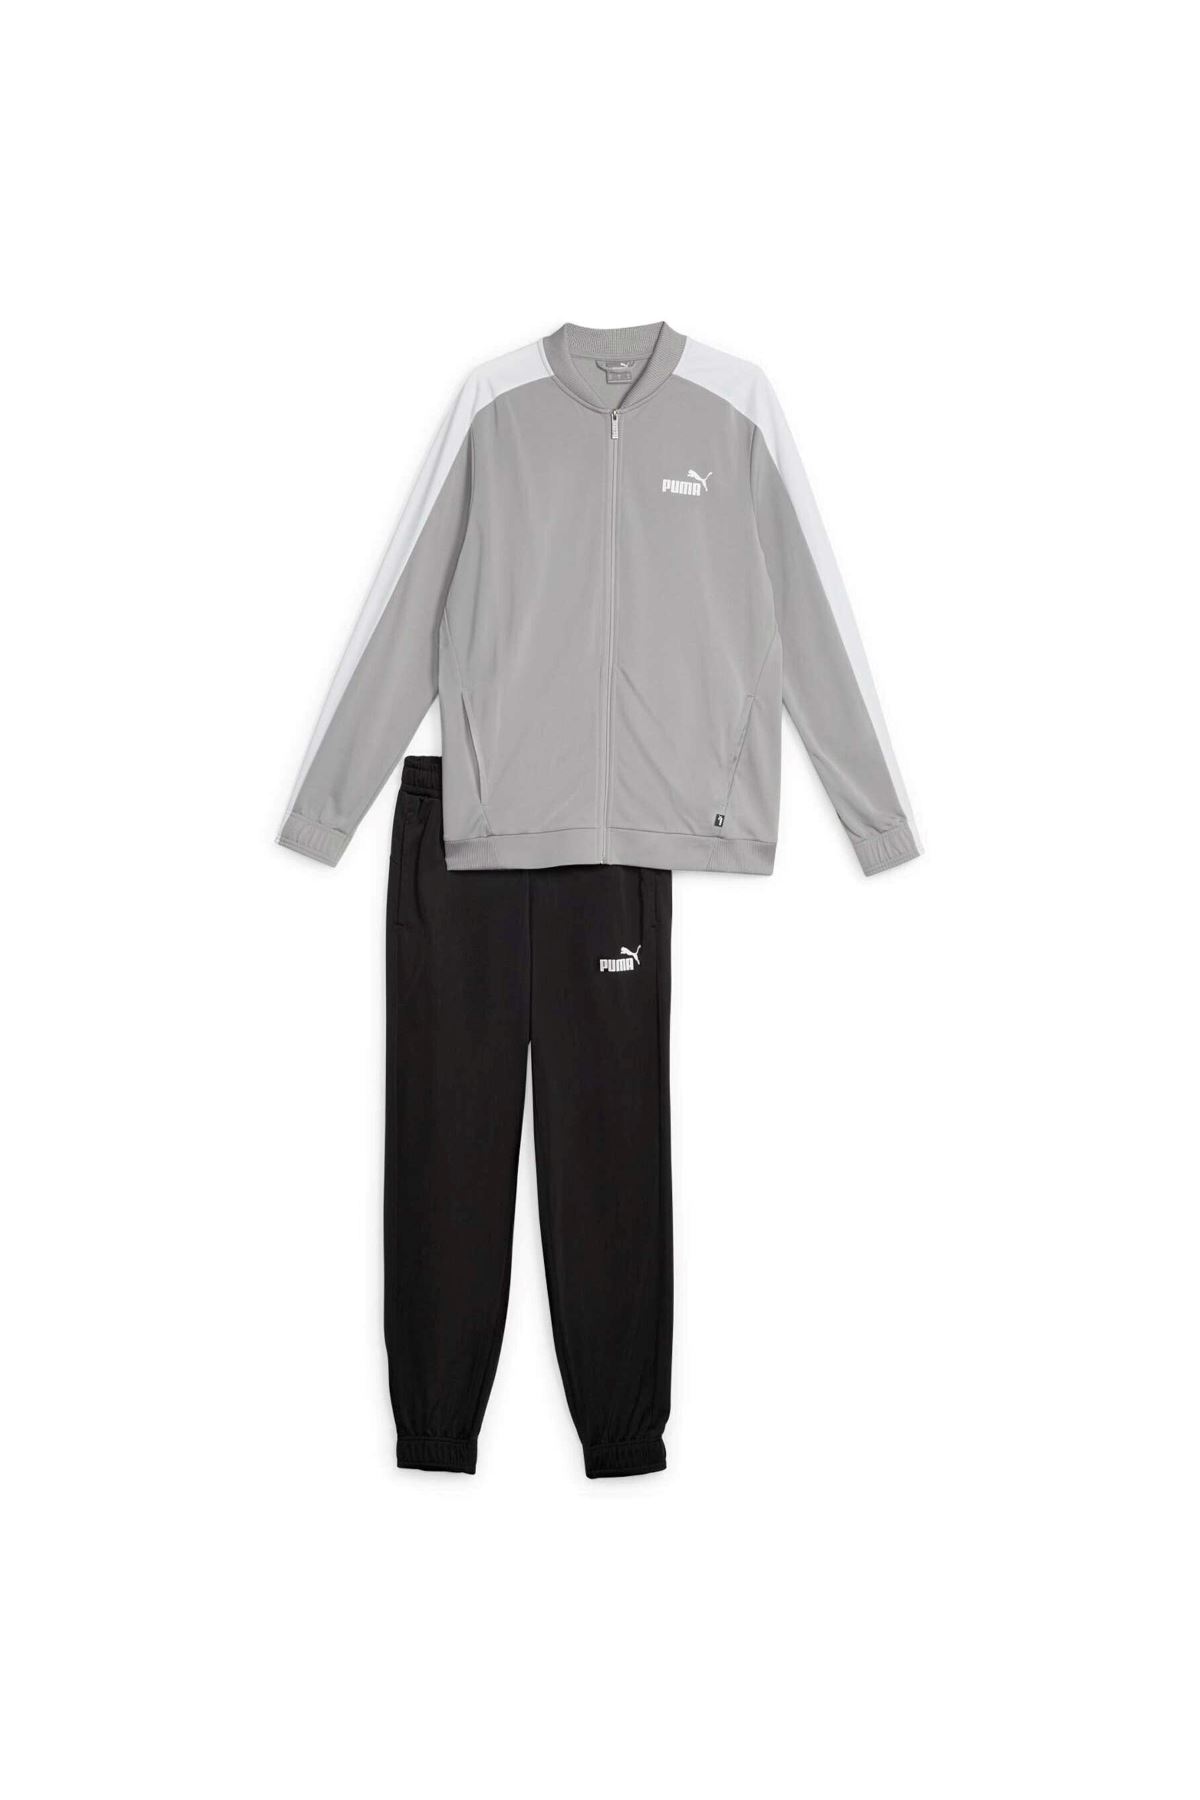 Puma Baseball Tricot Suit Erkek Gri Eşofman Takımı - 677428-14